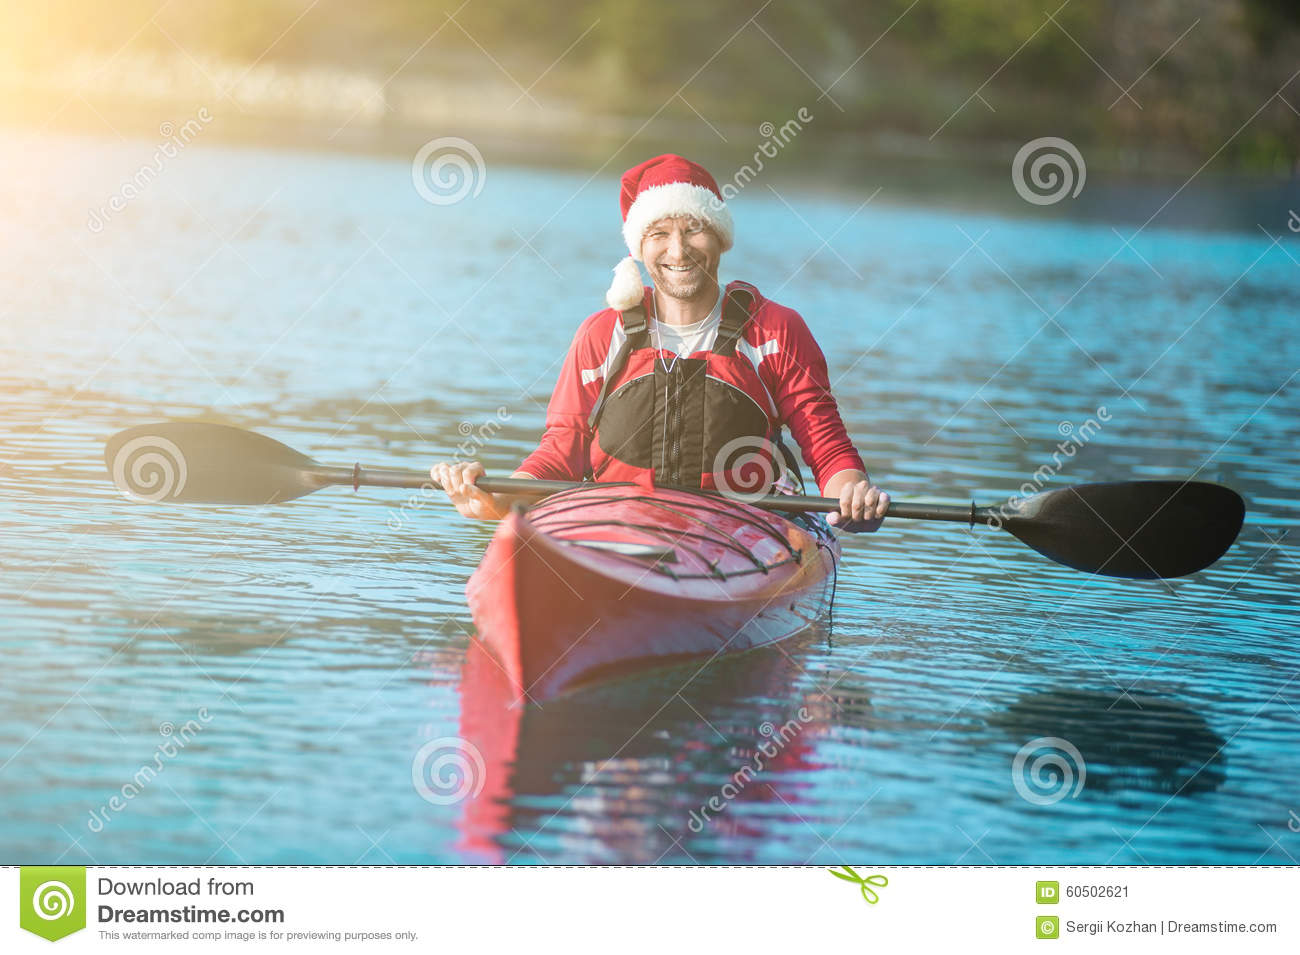 Santa kayak clipart.